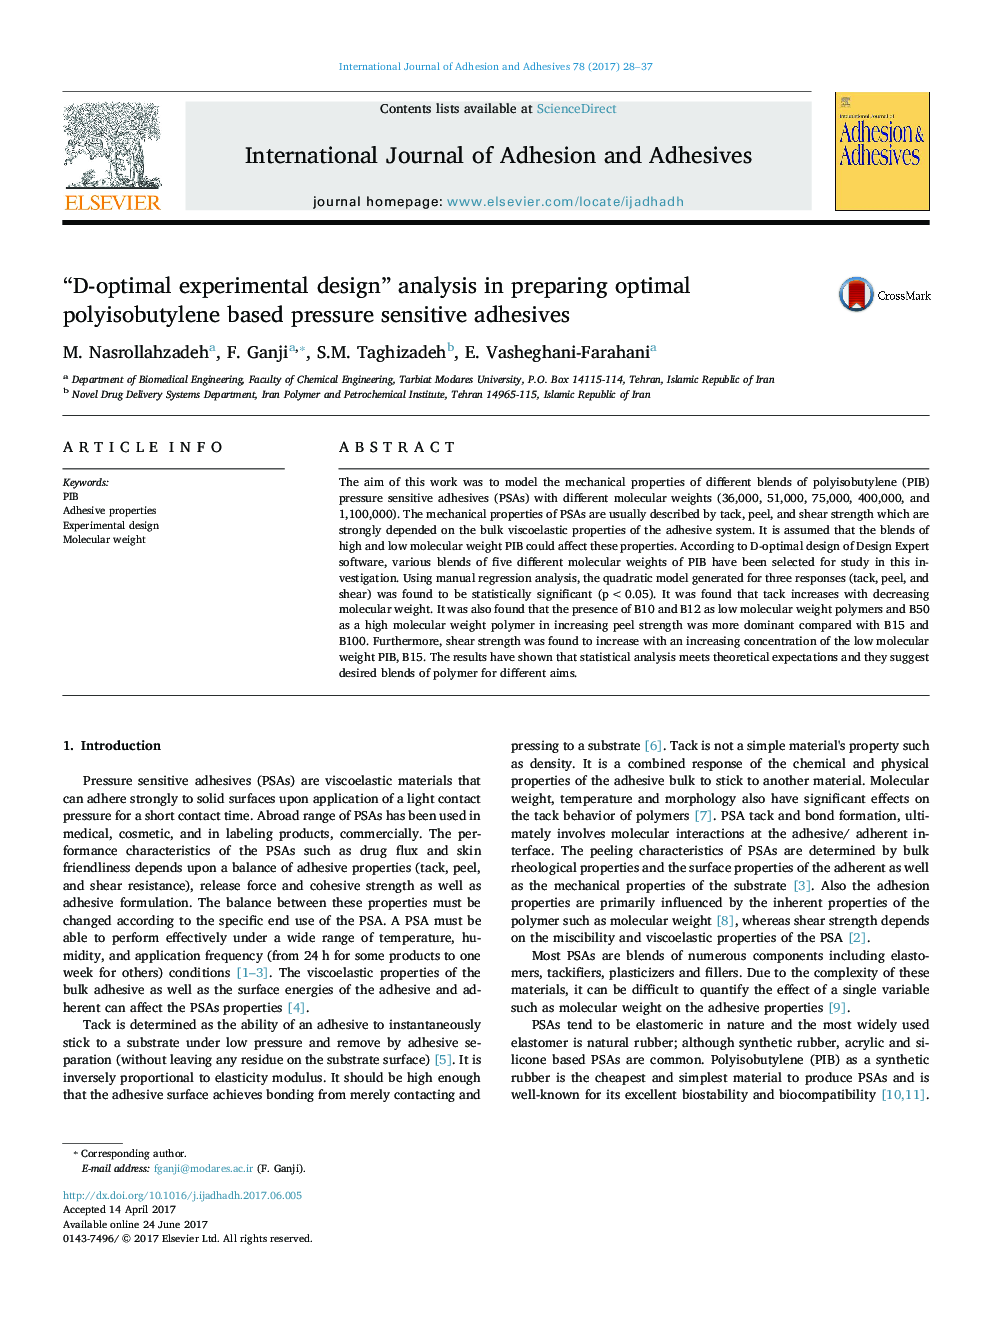 “D-optimal experimental design” analysis in preparing optimal polyisobutylene based pressure sensitive adhesives